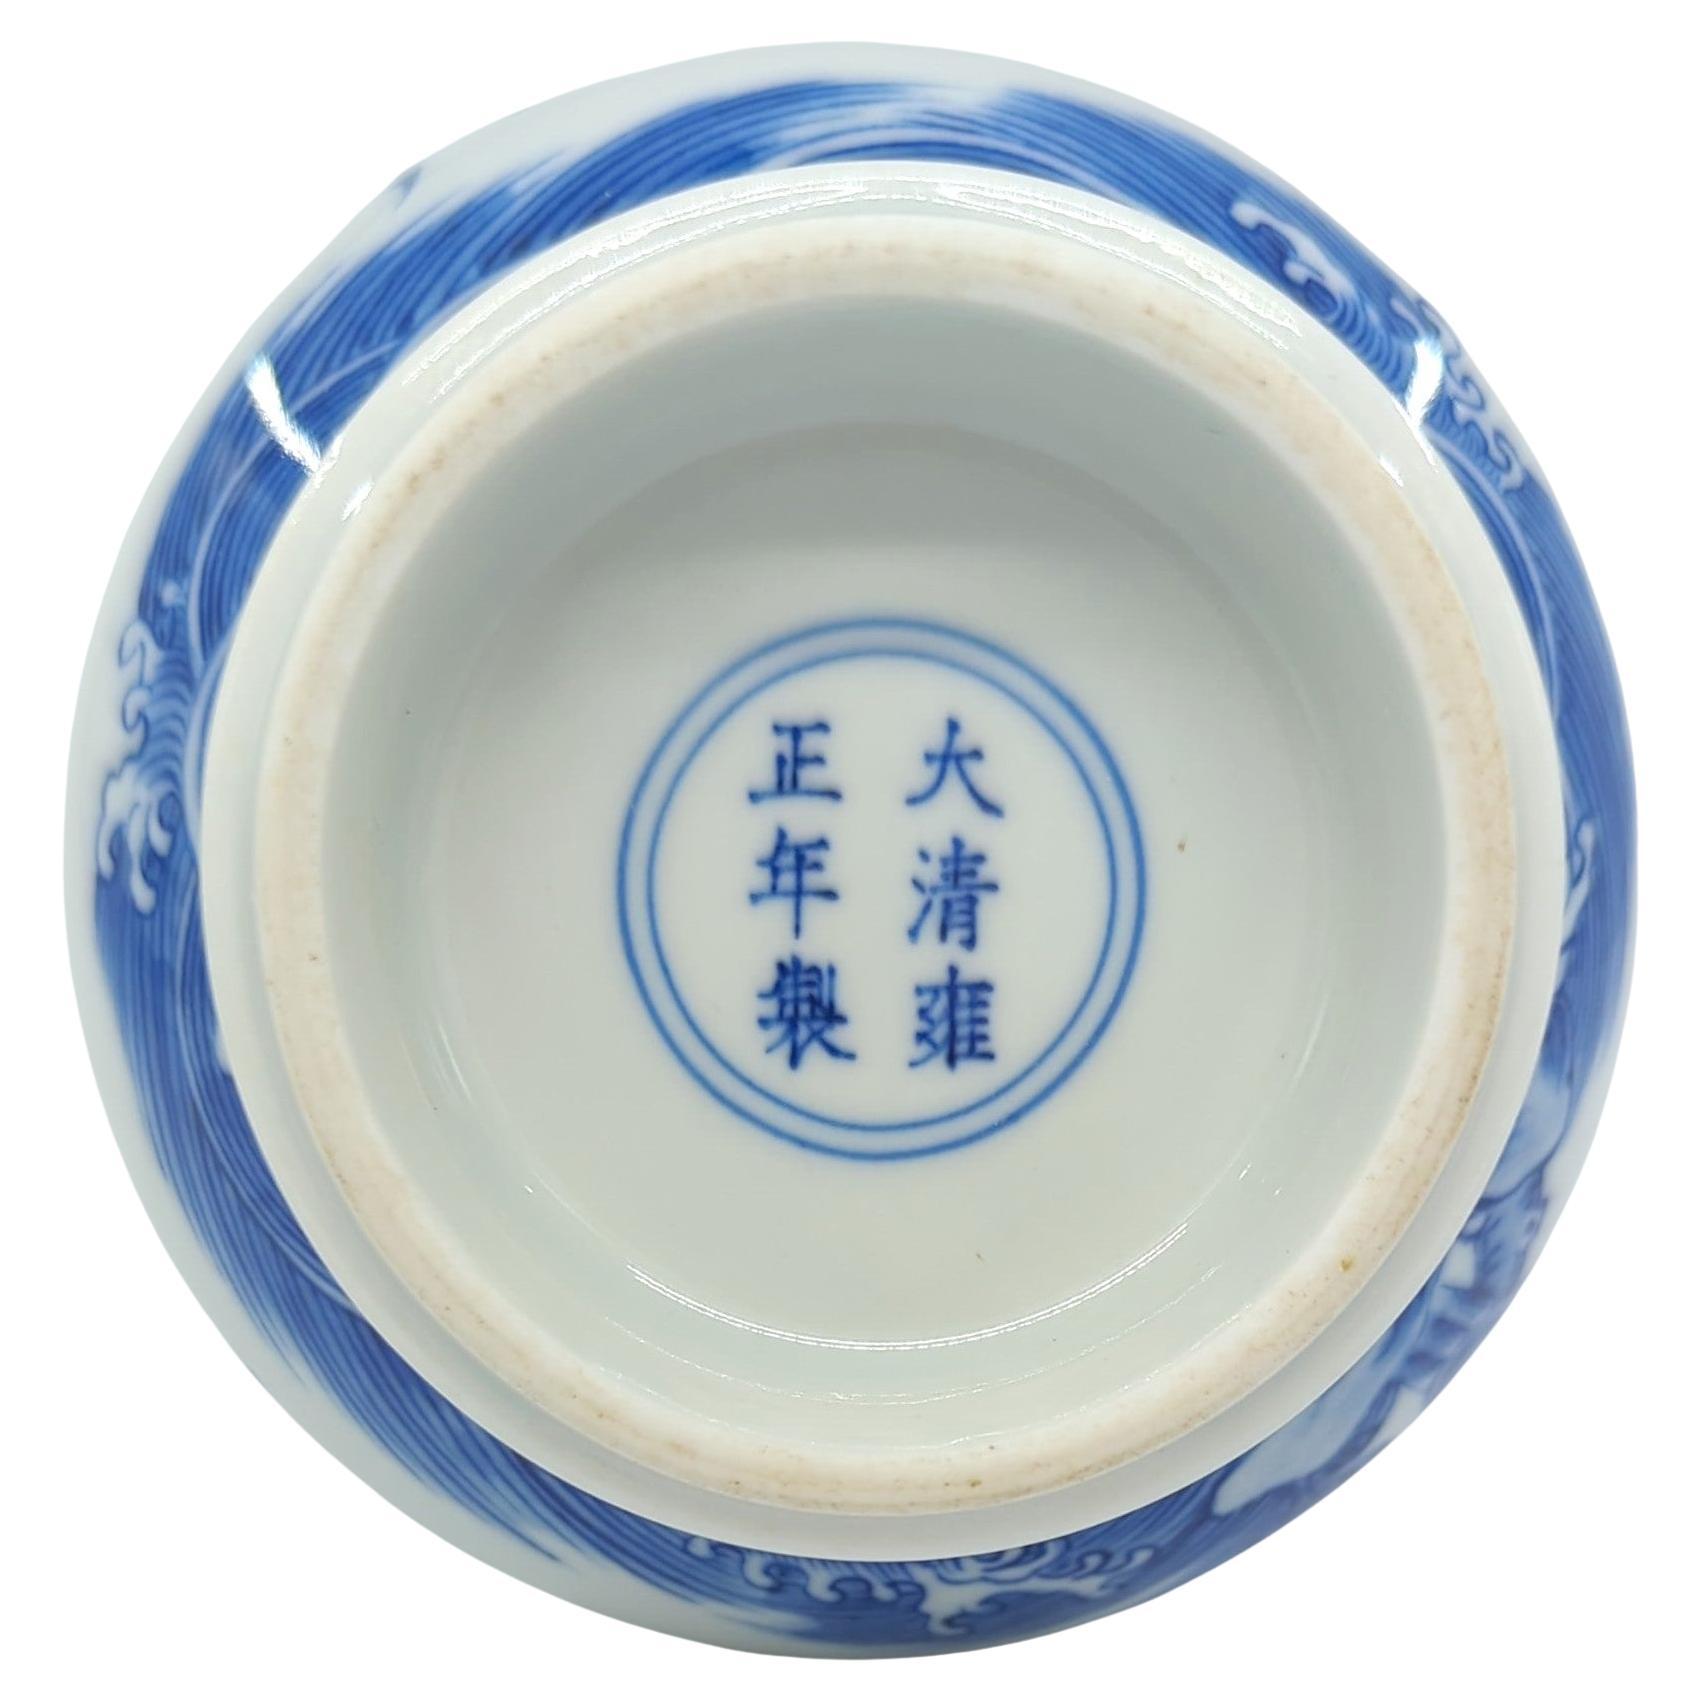 Fine Chinese Porcelain Underglaze Blue White Bats Peaches Bottle Vase Stand 20c For Sale 1